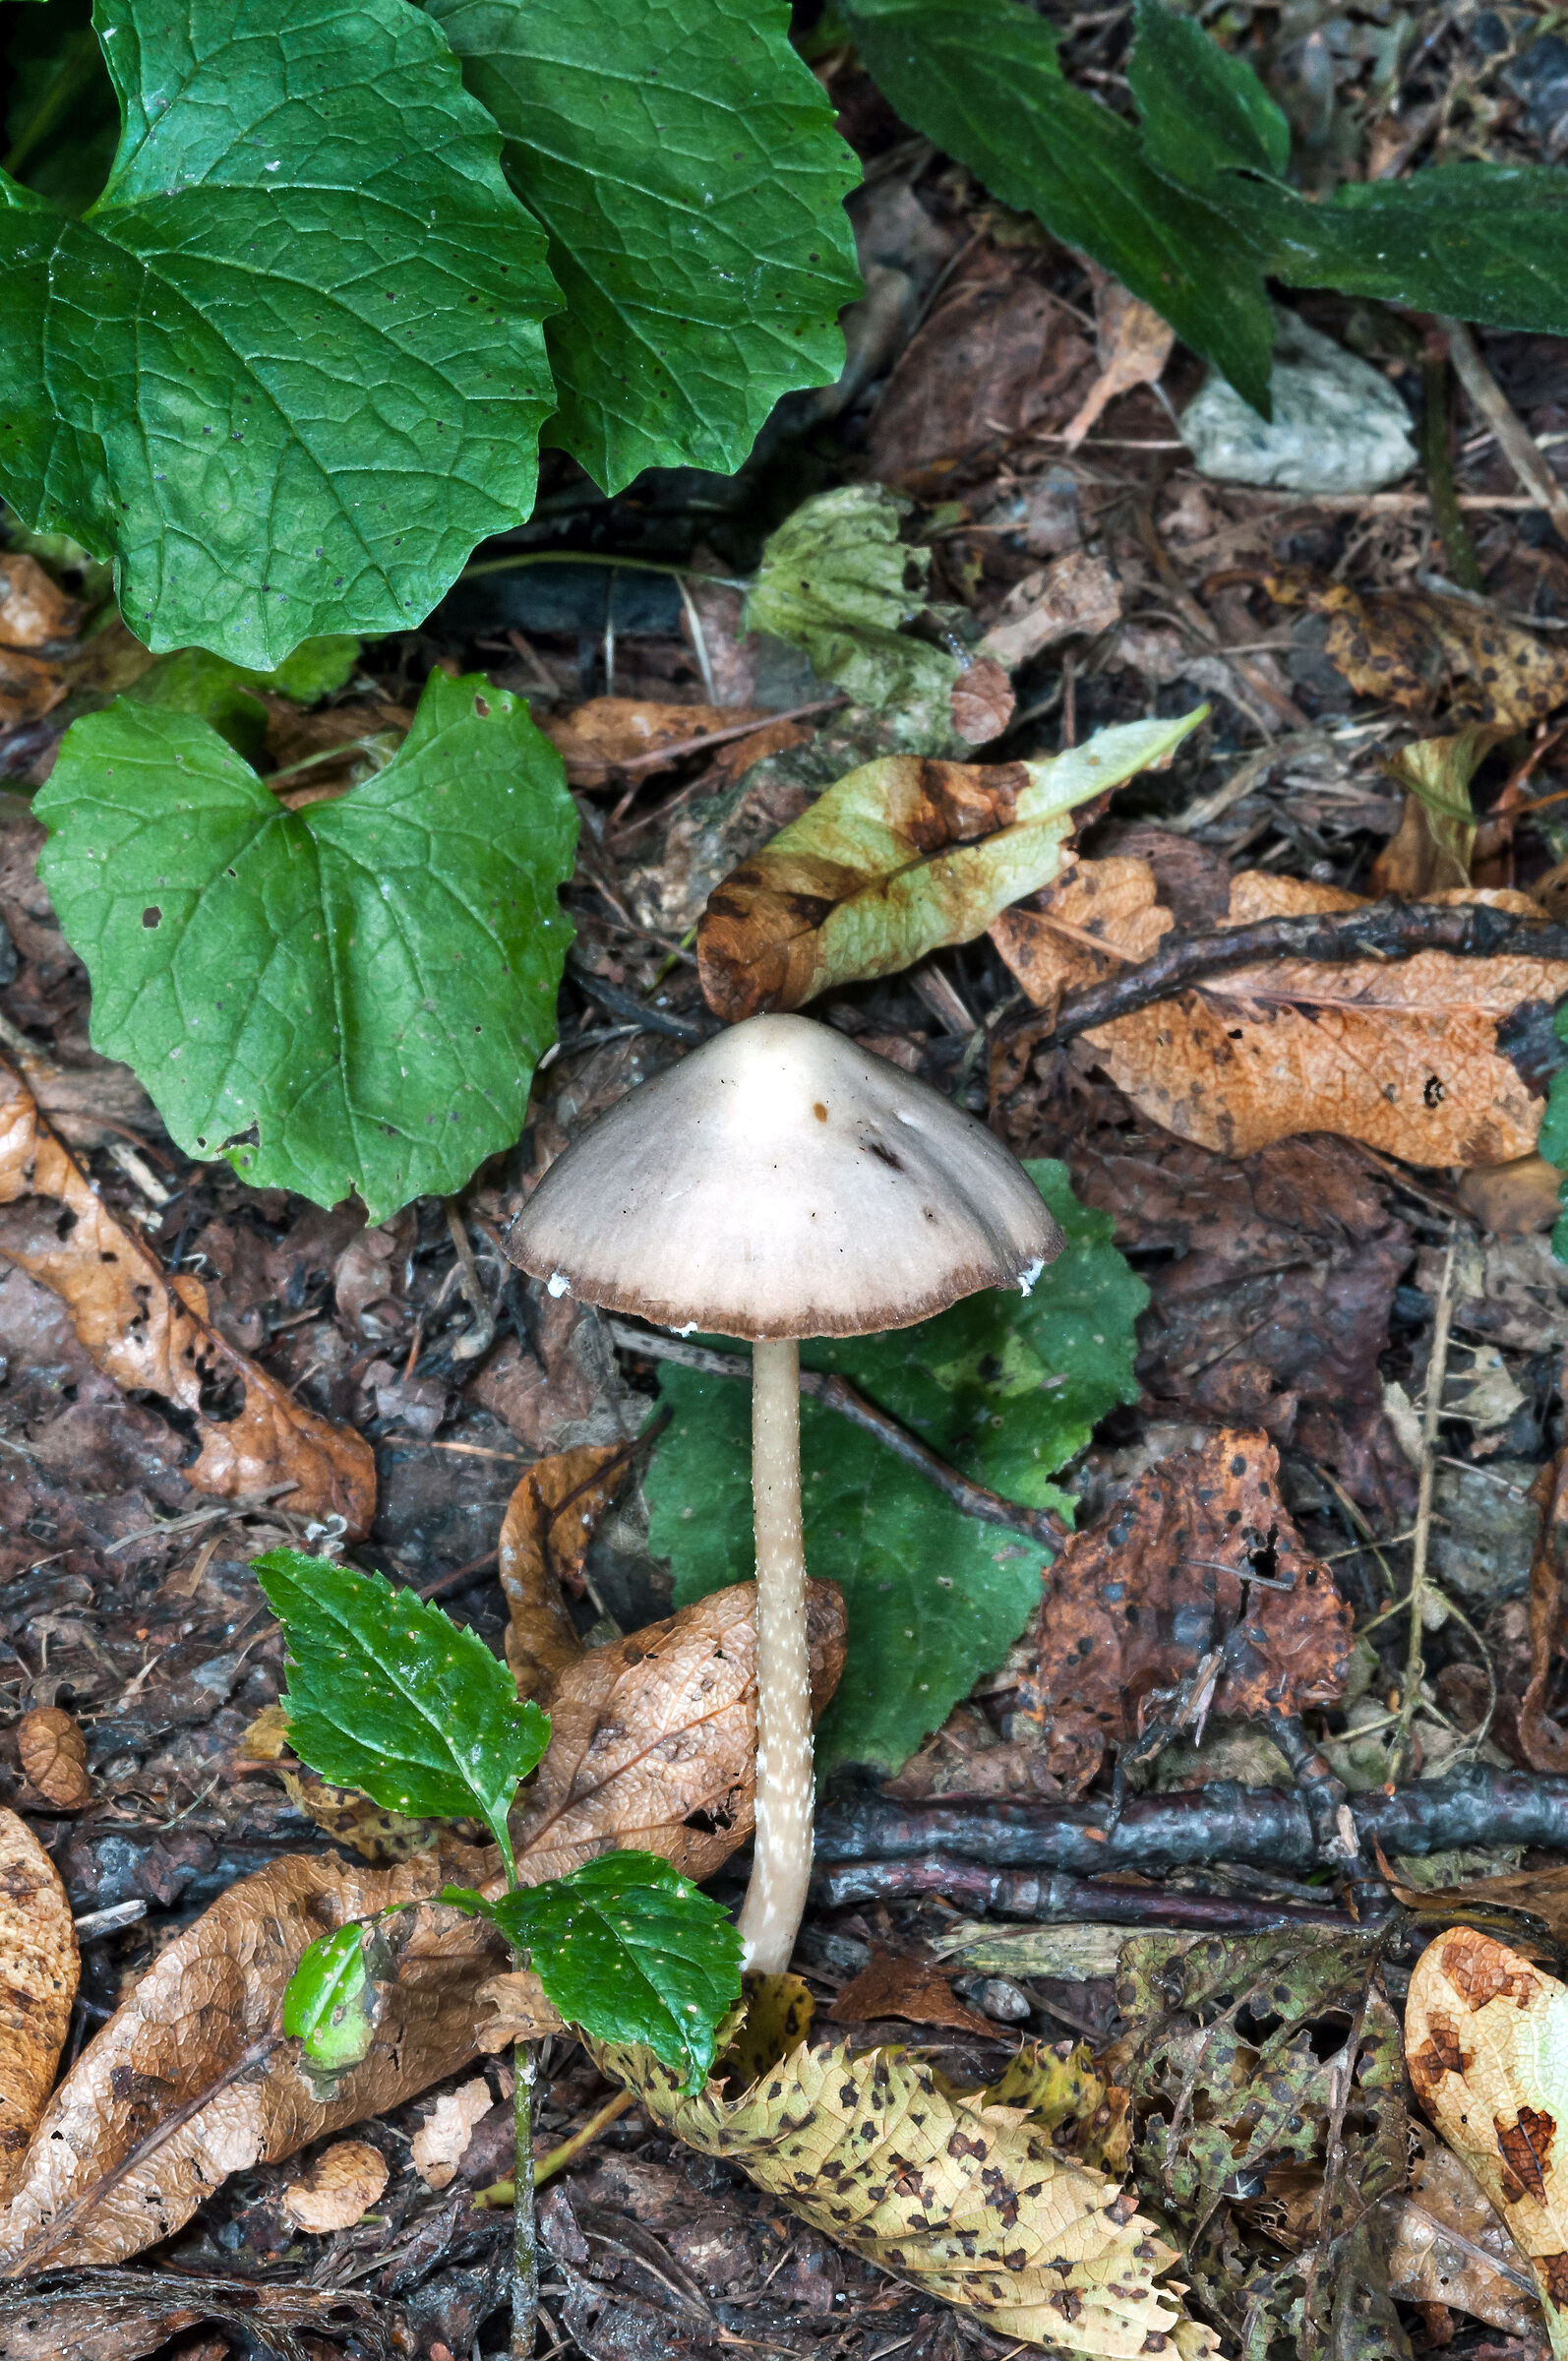 Undergrowth with mushroom...